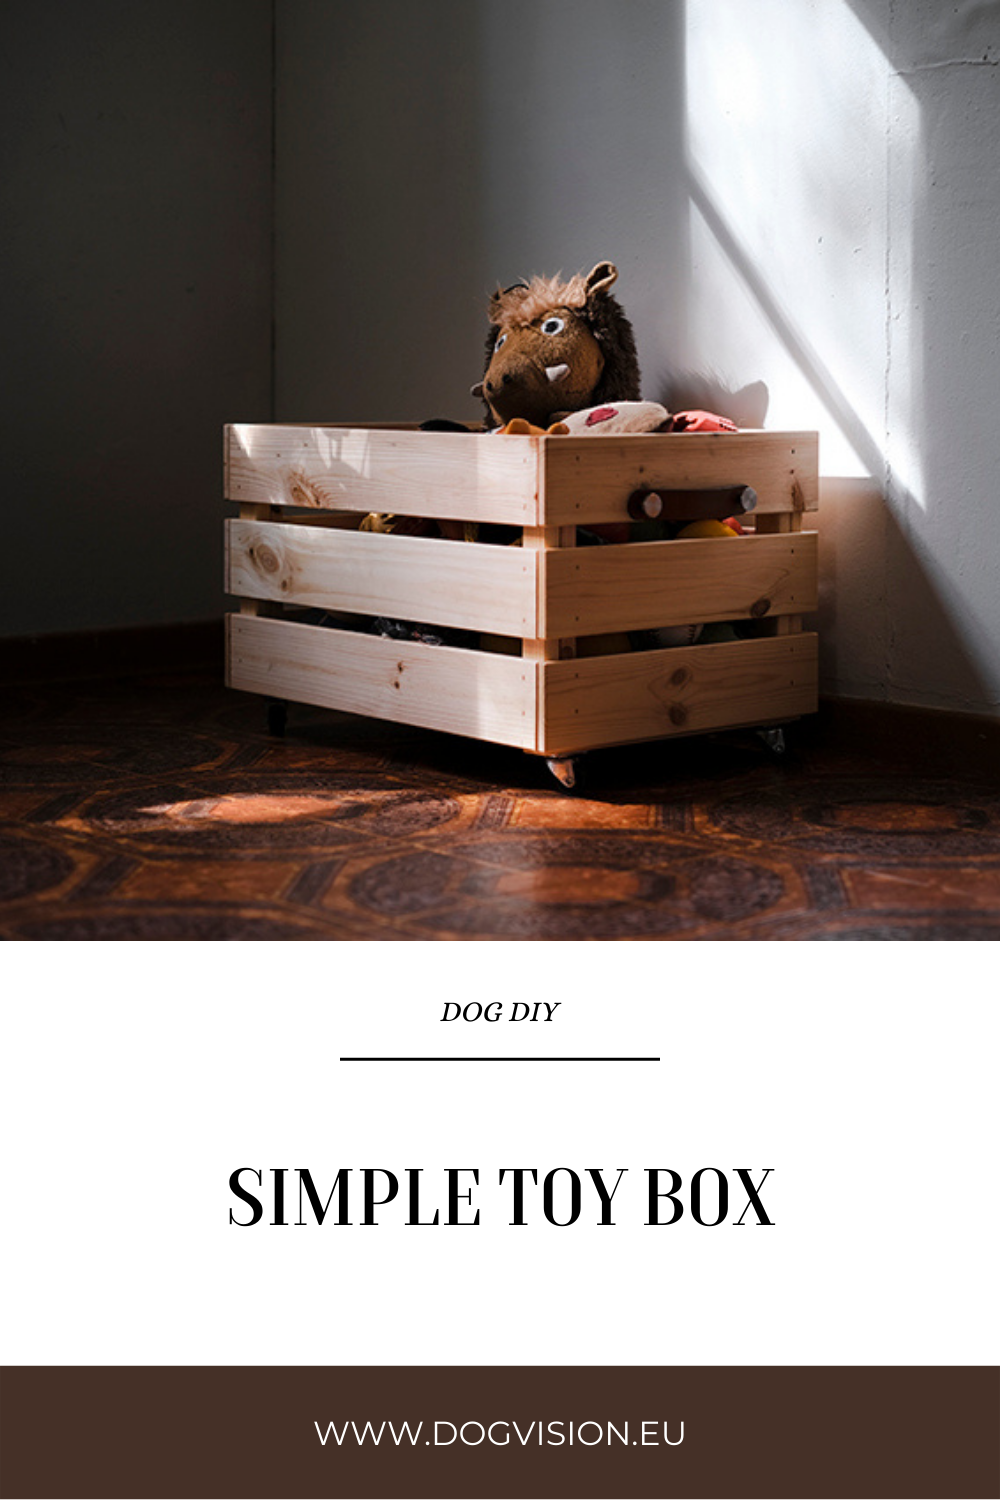 Toy box, dog toys, dog DIY, Ikea hack, www.DOGvision.eu